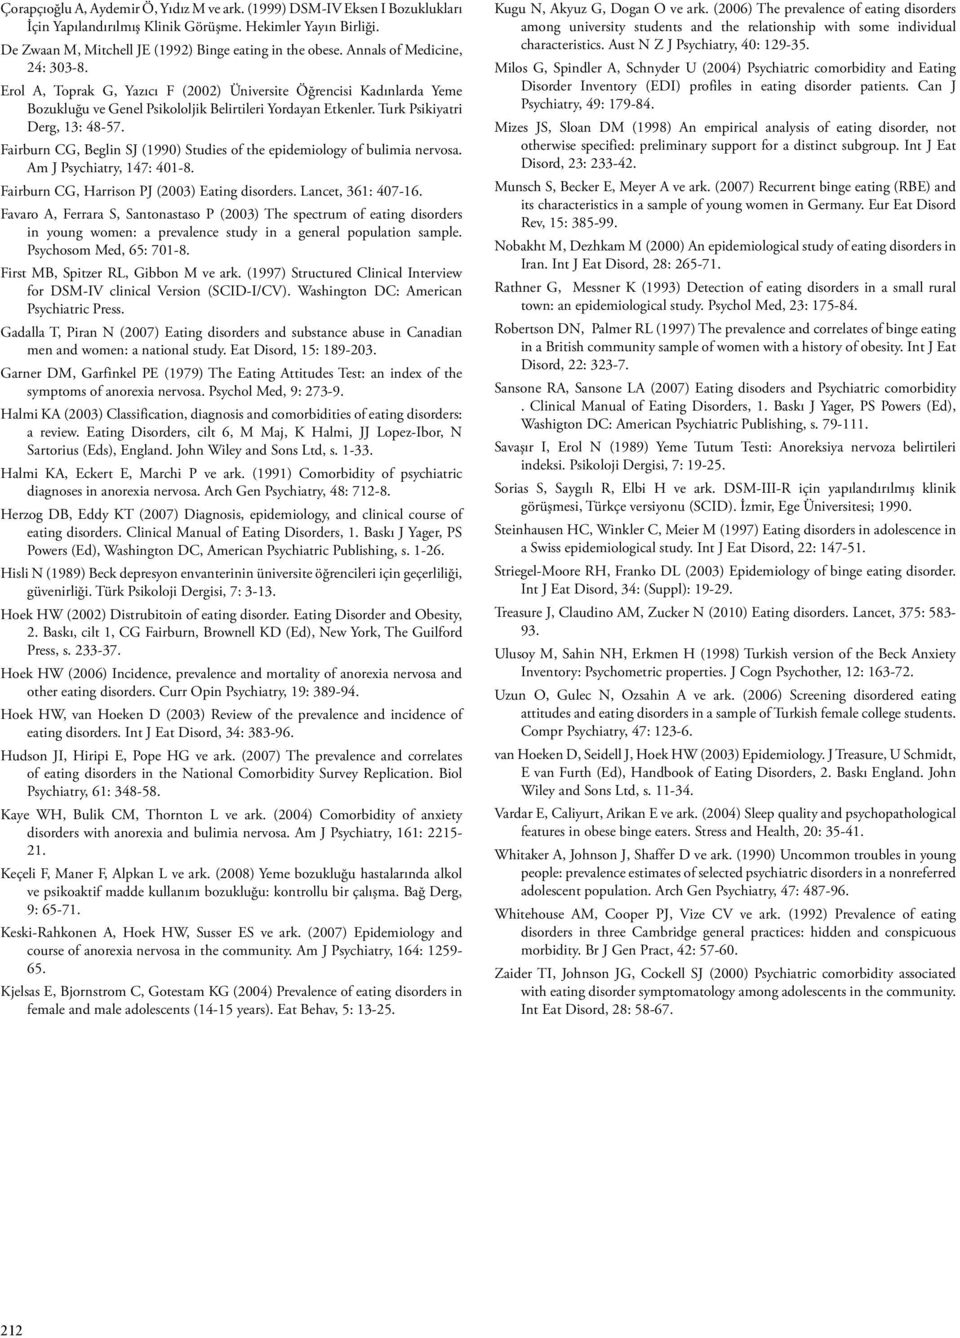 Fairburn CG, Beglin SJ (1990) Studies of the epidemiology of bulimia nervosa. Am J Psychiatry, 147: 401-8. Fairburn CG, Harrison PJ (2003) Eating disorders. Lancet, 361: 407-16.